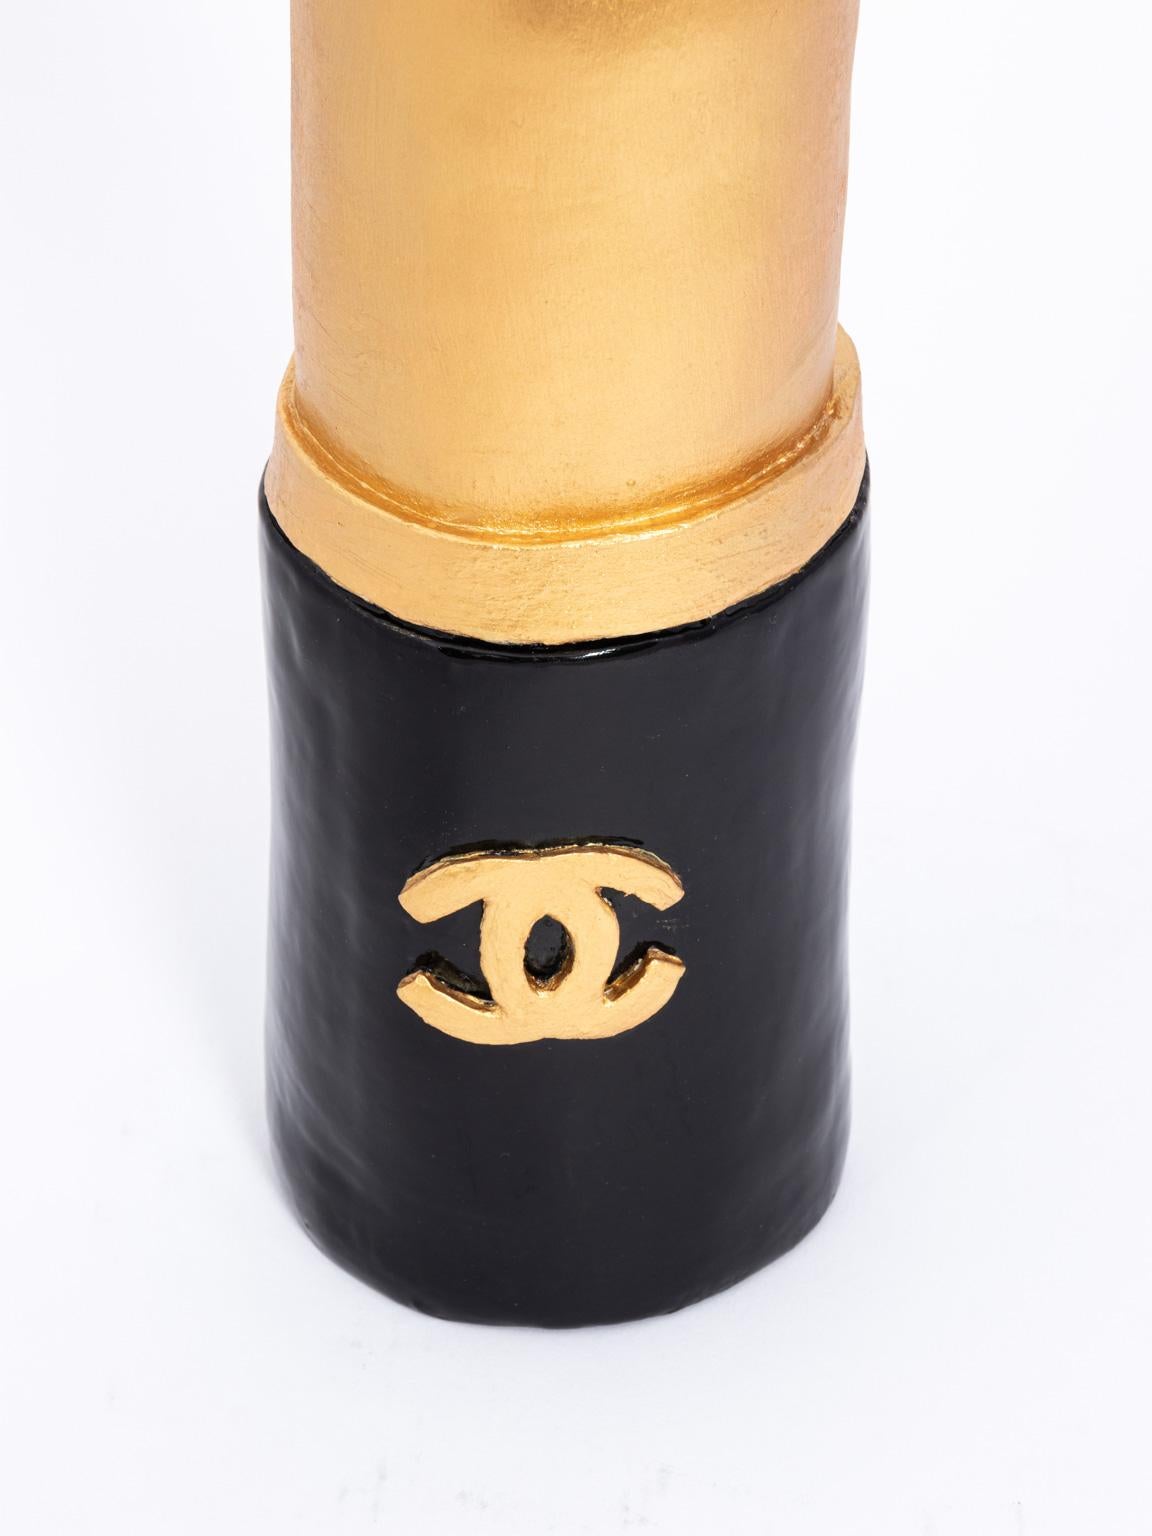 American Contemporary Hand Built Ceramic Lipstick